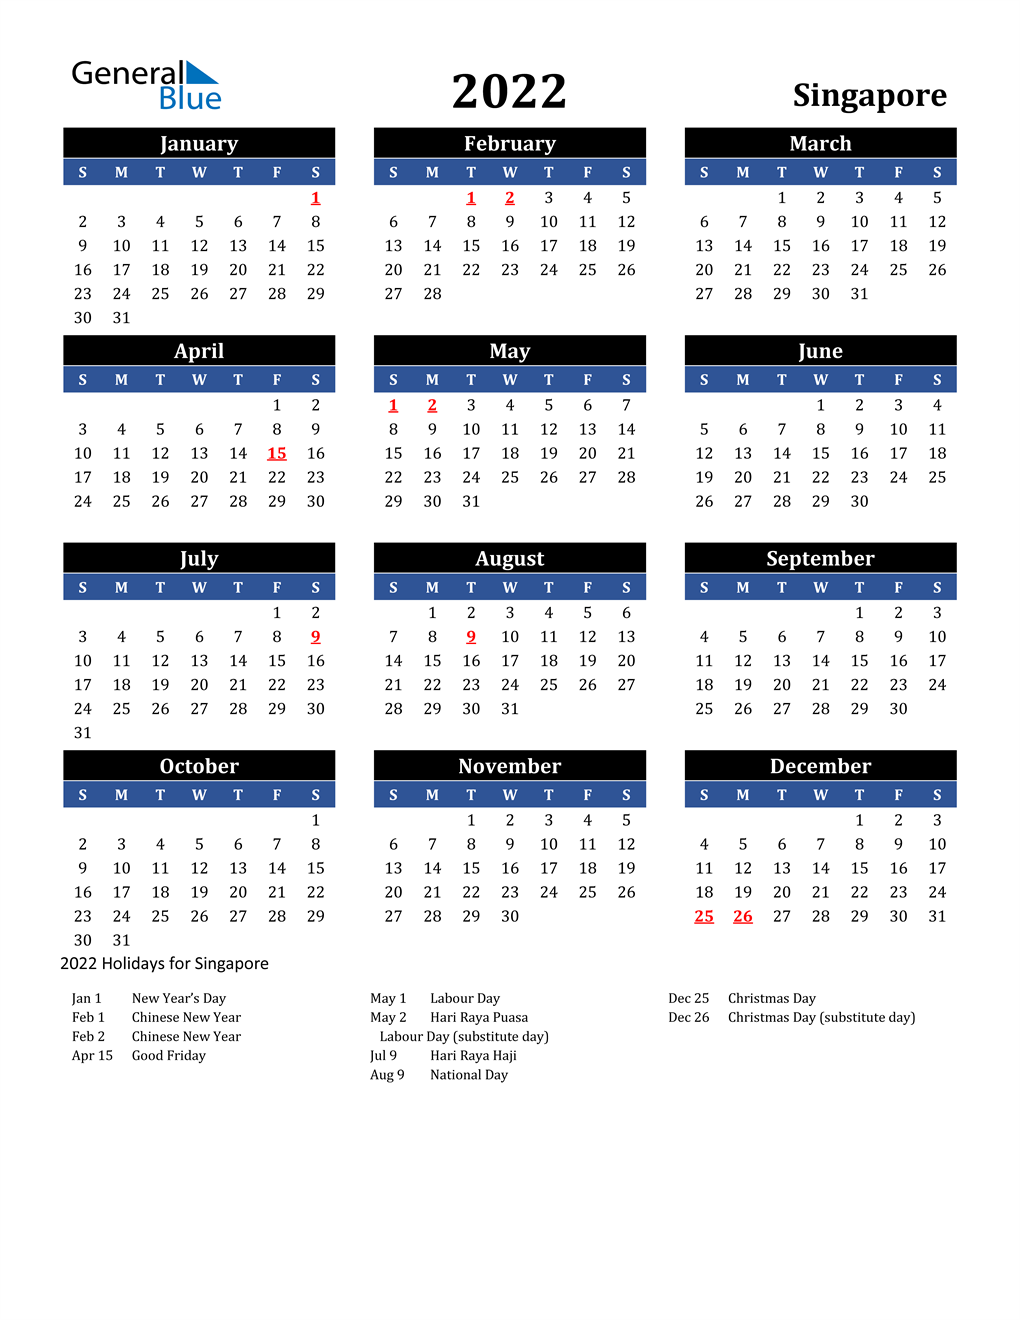 Mgh Holiday Calendar 2022 2022 Singapore Calendar With Holidays